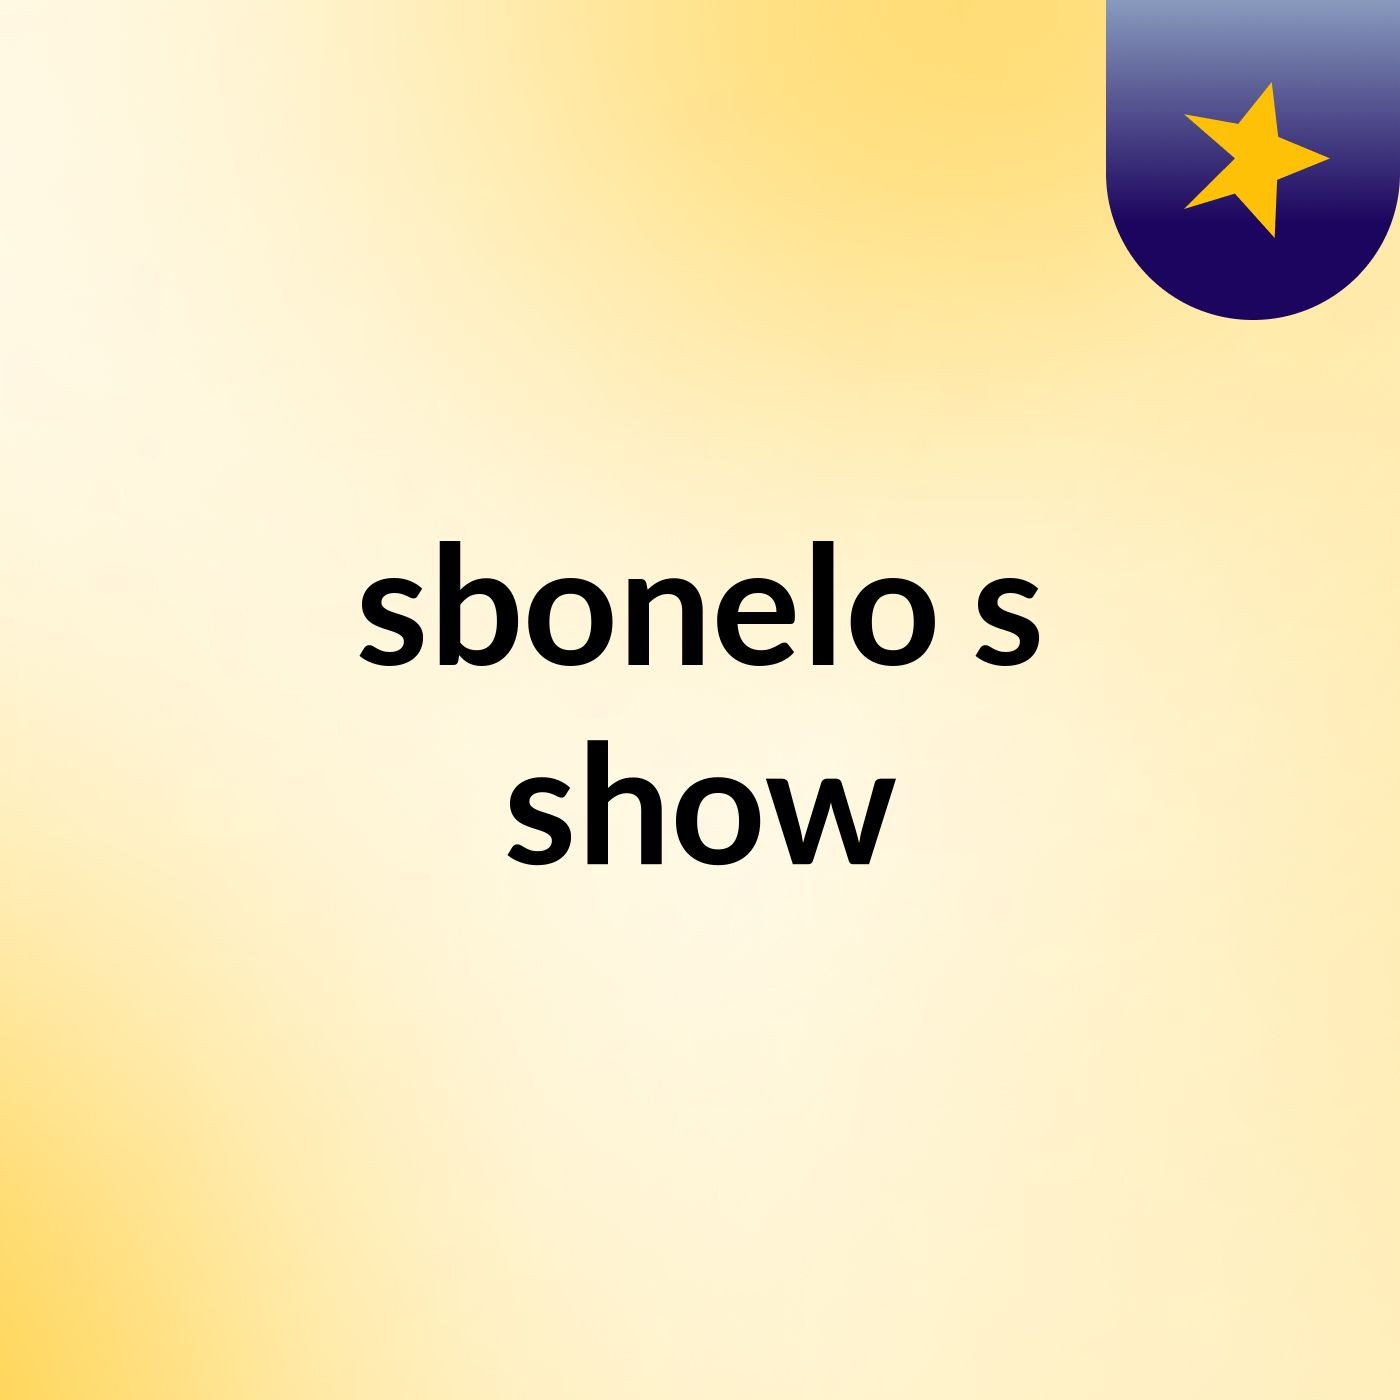 sbonelo's show